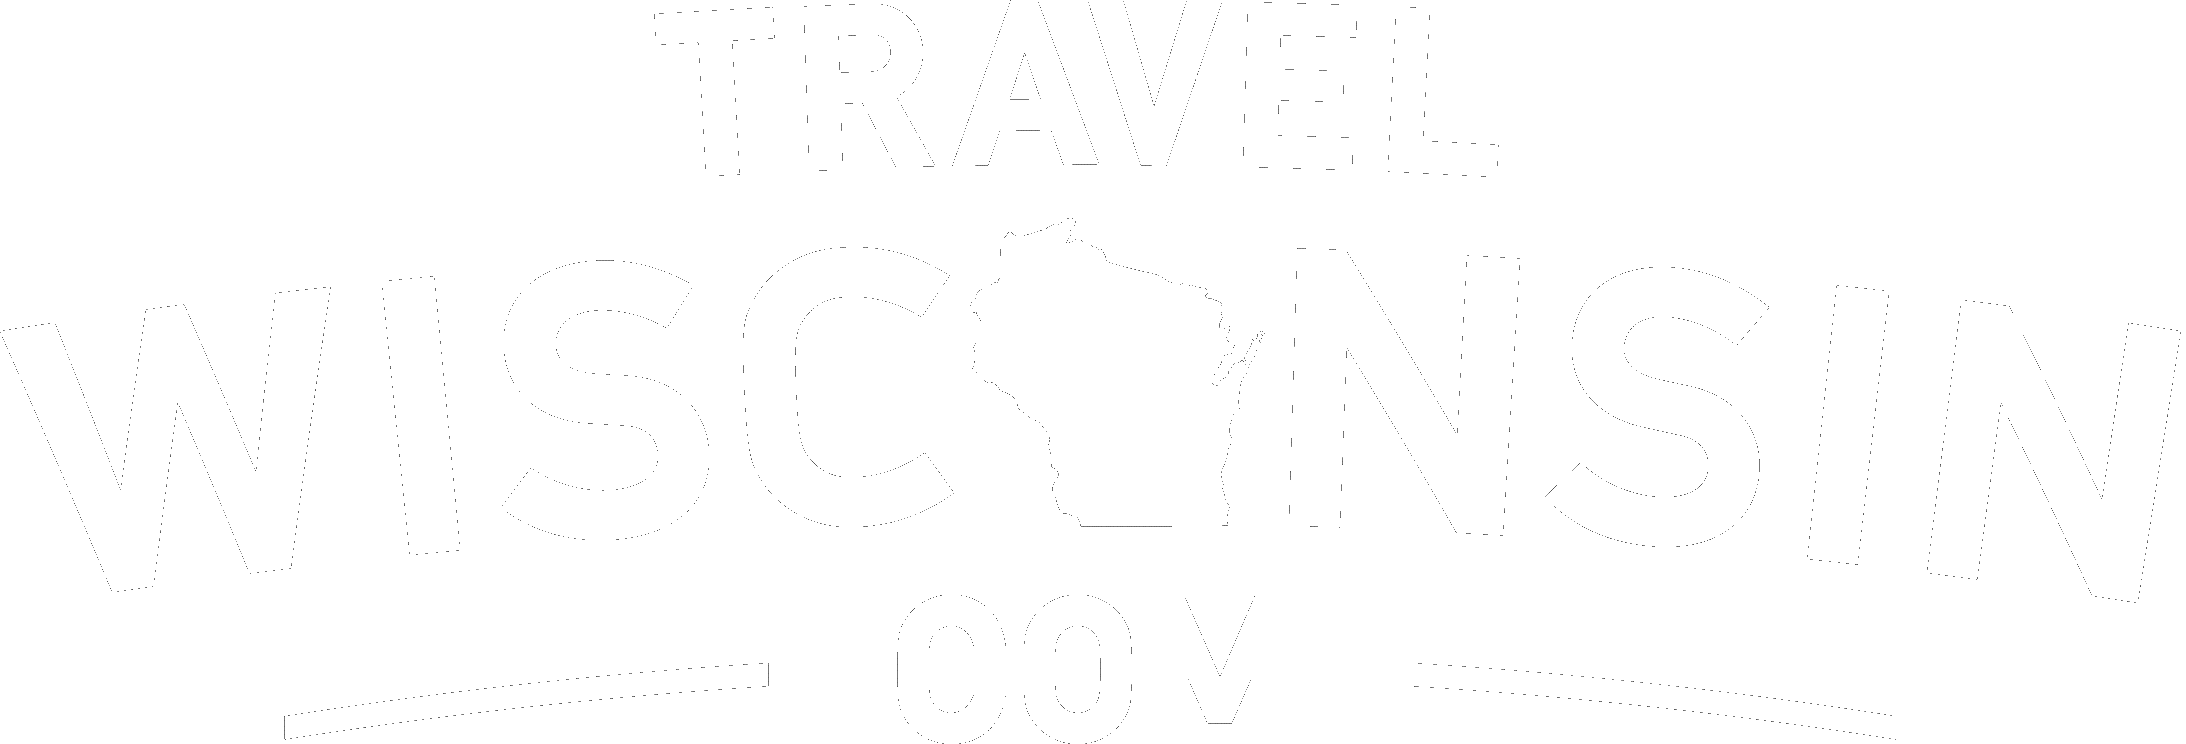 Wisconson Logo - Travel Wisconsin Logo Files | Travel Wisconsin